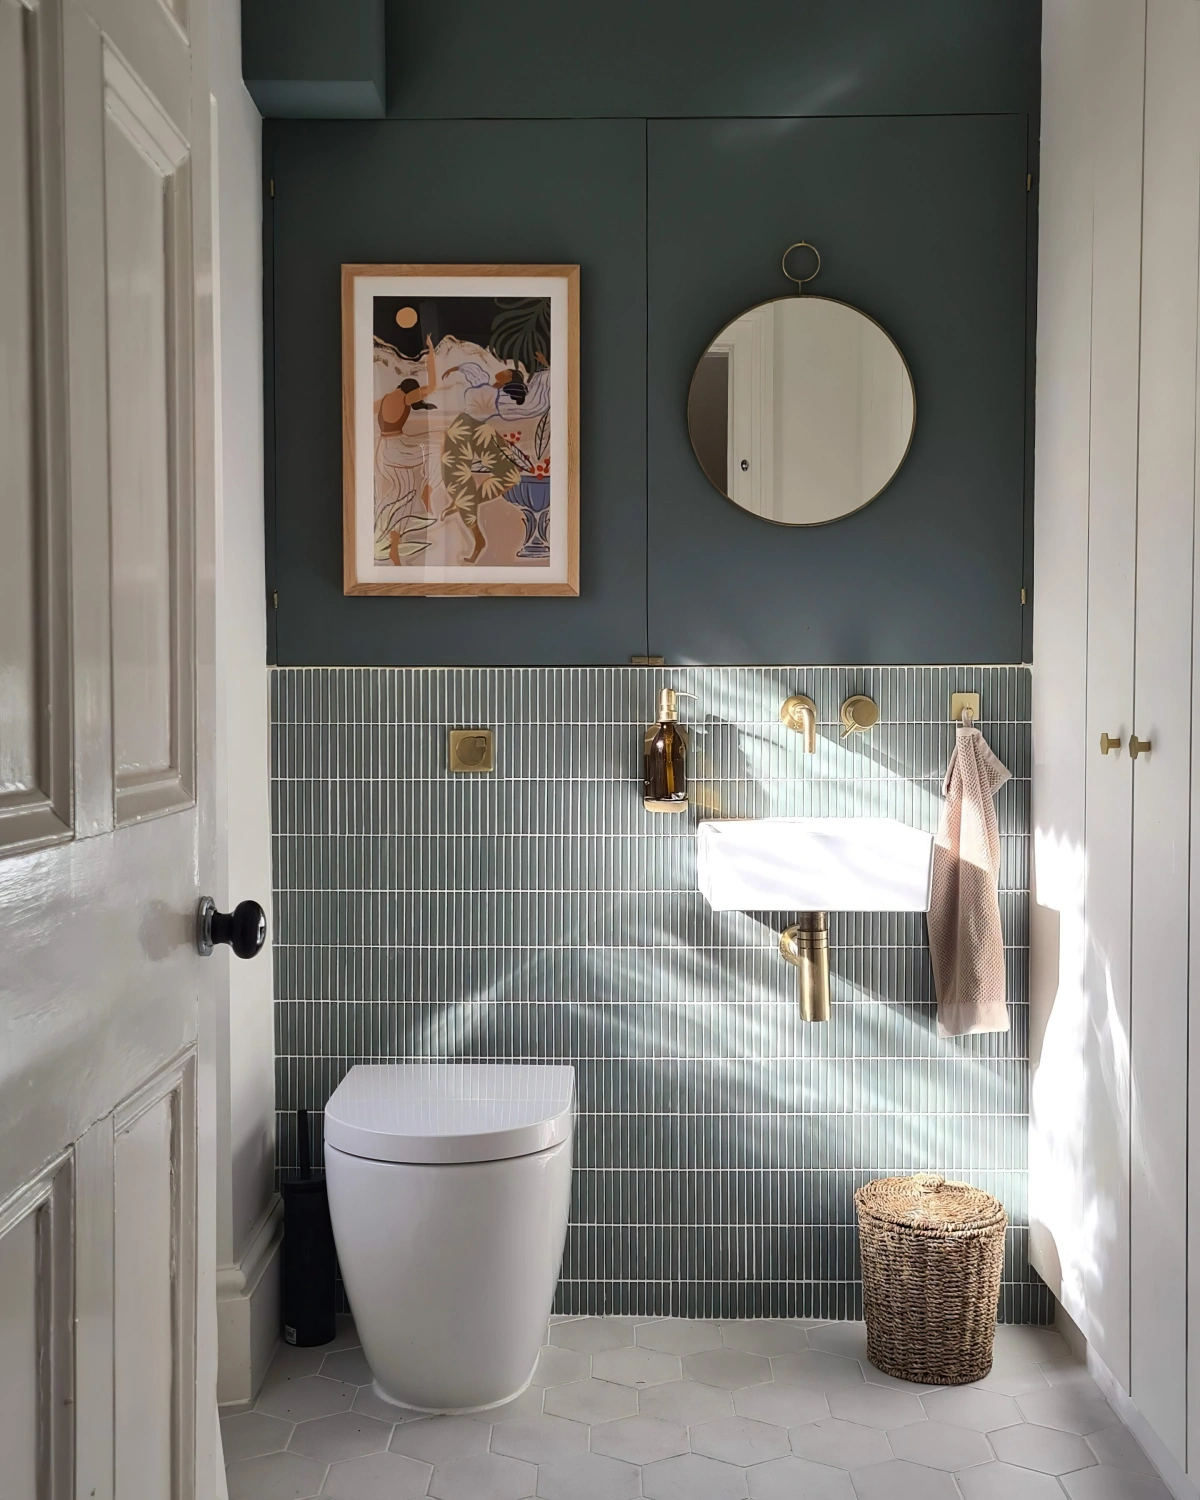 idee carrelage wc peinture vert fonce cadre photo bois art miroir rond panier tresse